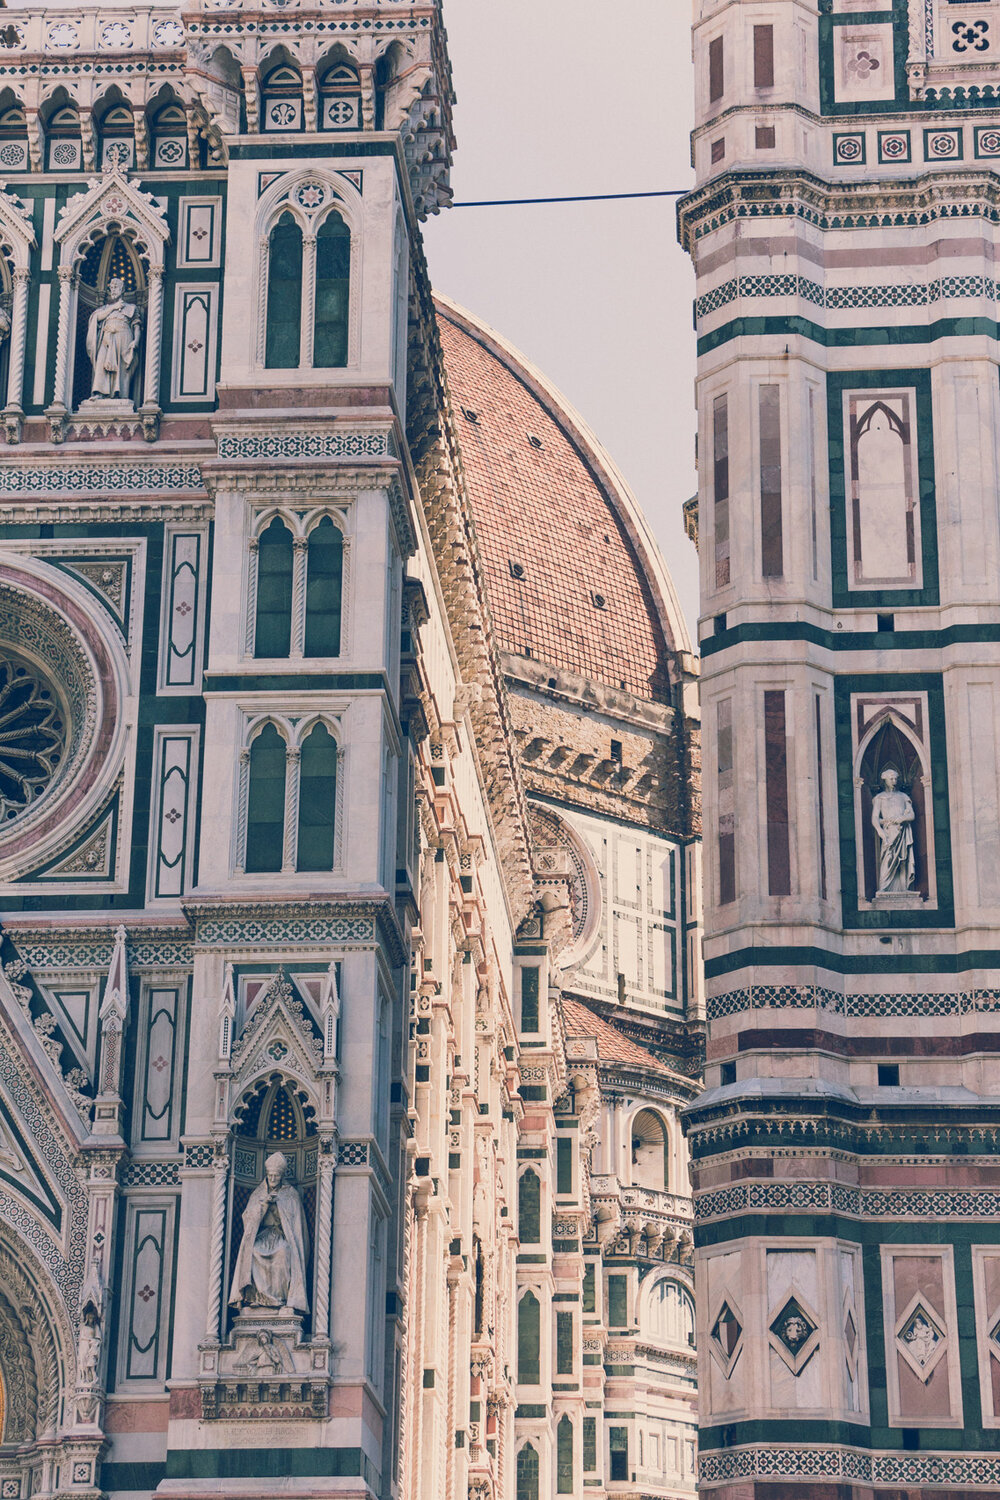 Colorful facade of Santa Maria del Fiore, Florence